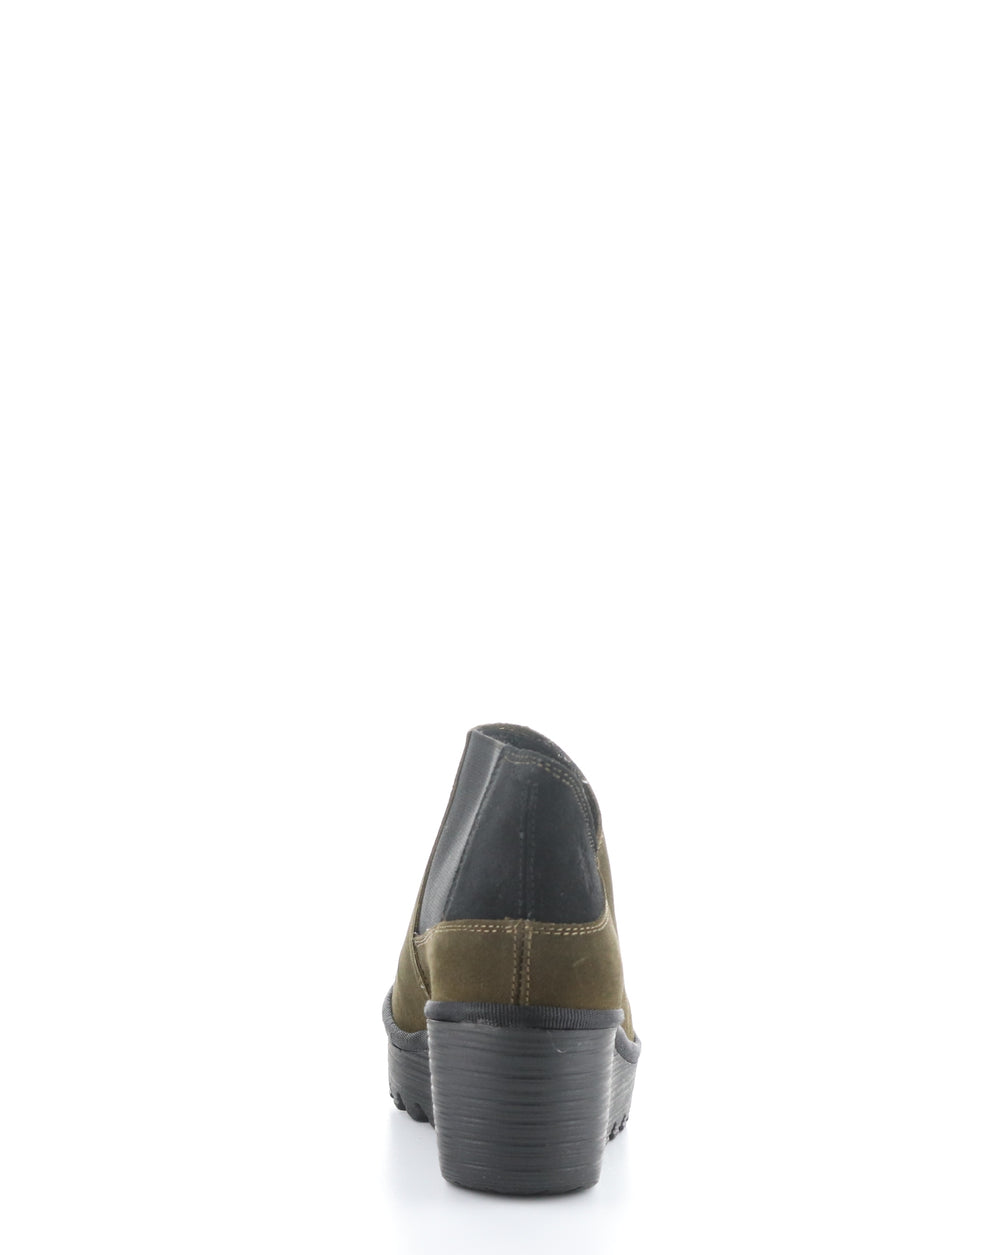 YEGO400FLY 009 SLUDGE/BLACK Elasticated Boots